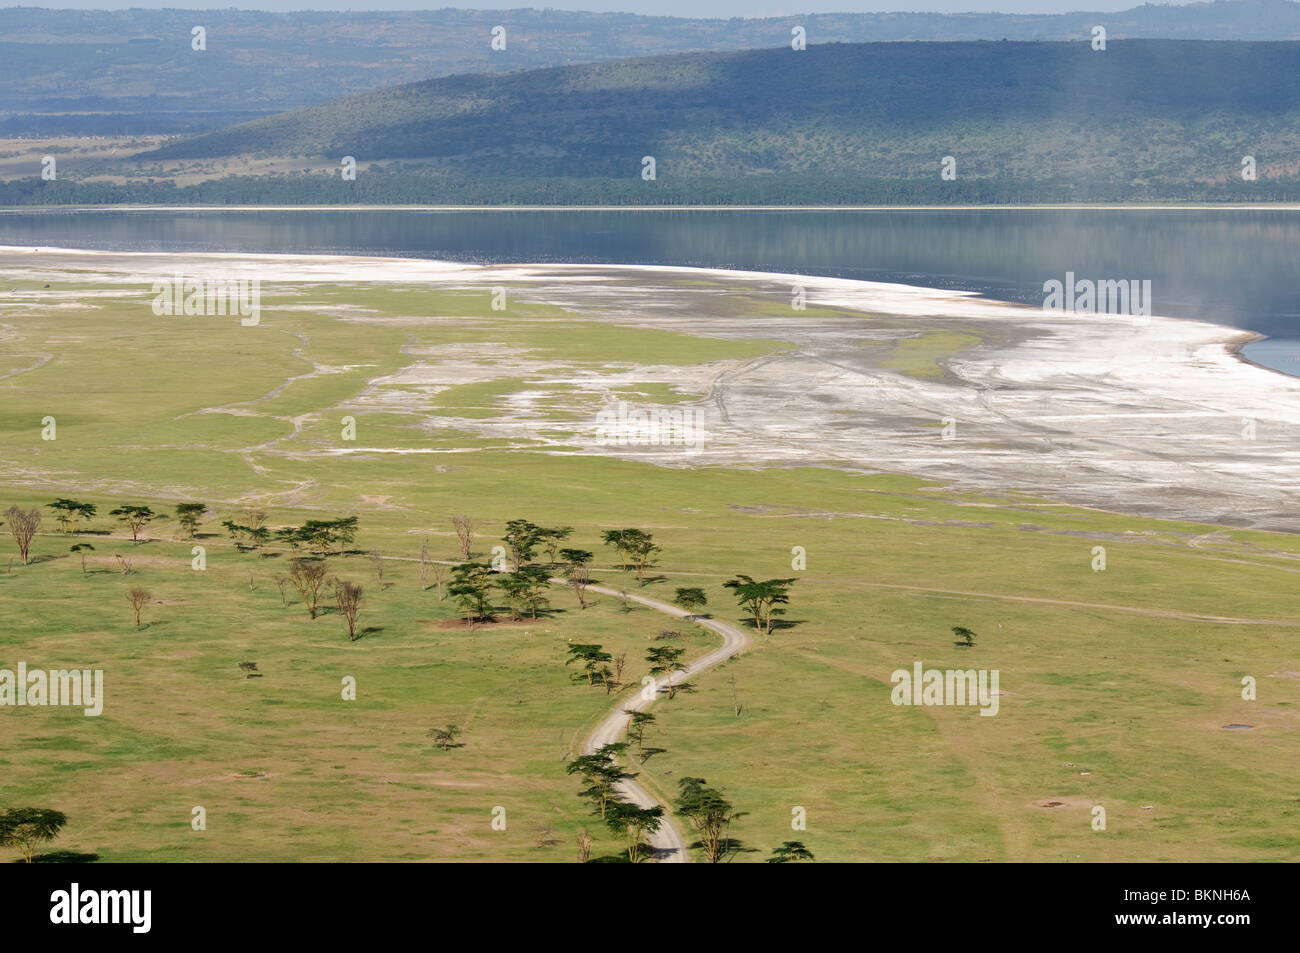 Lake Nakuru landscape with road crossing savannah Stock Photo